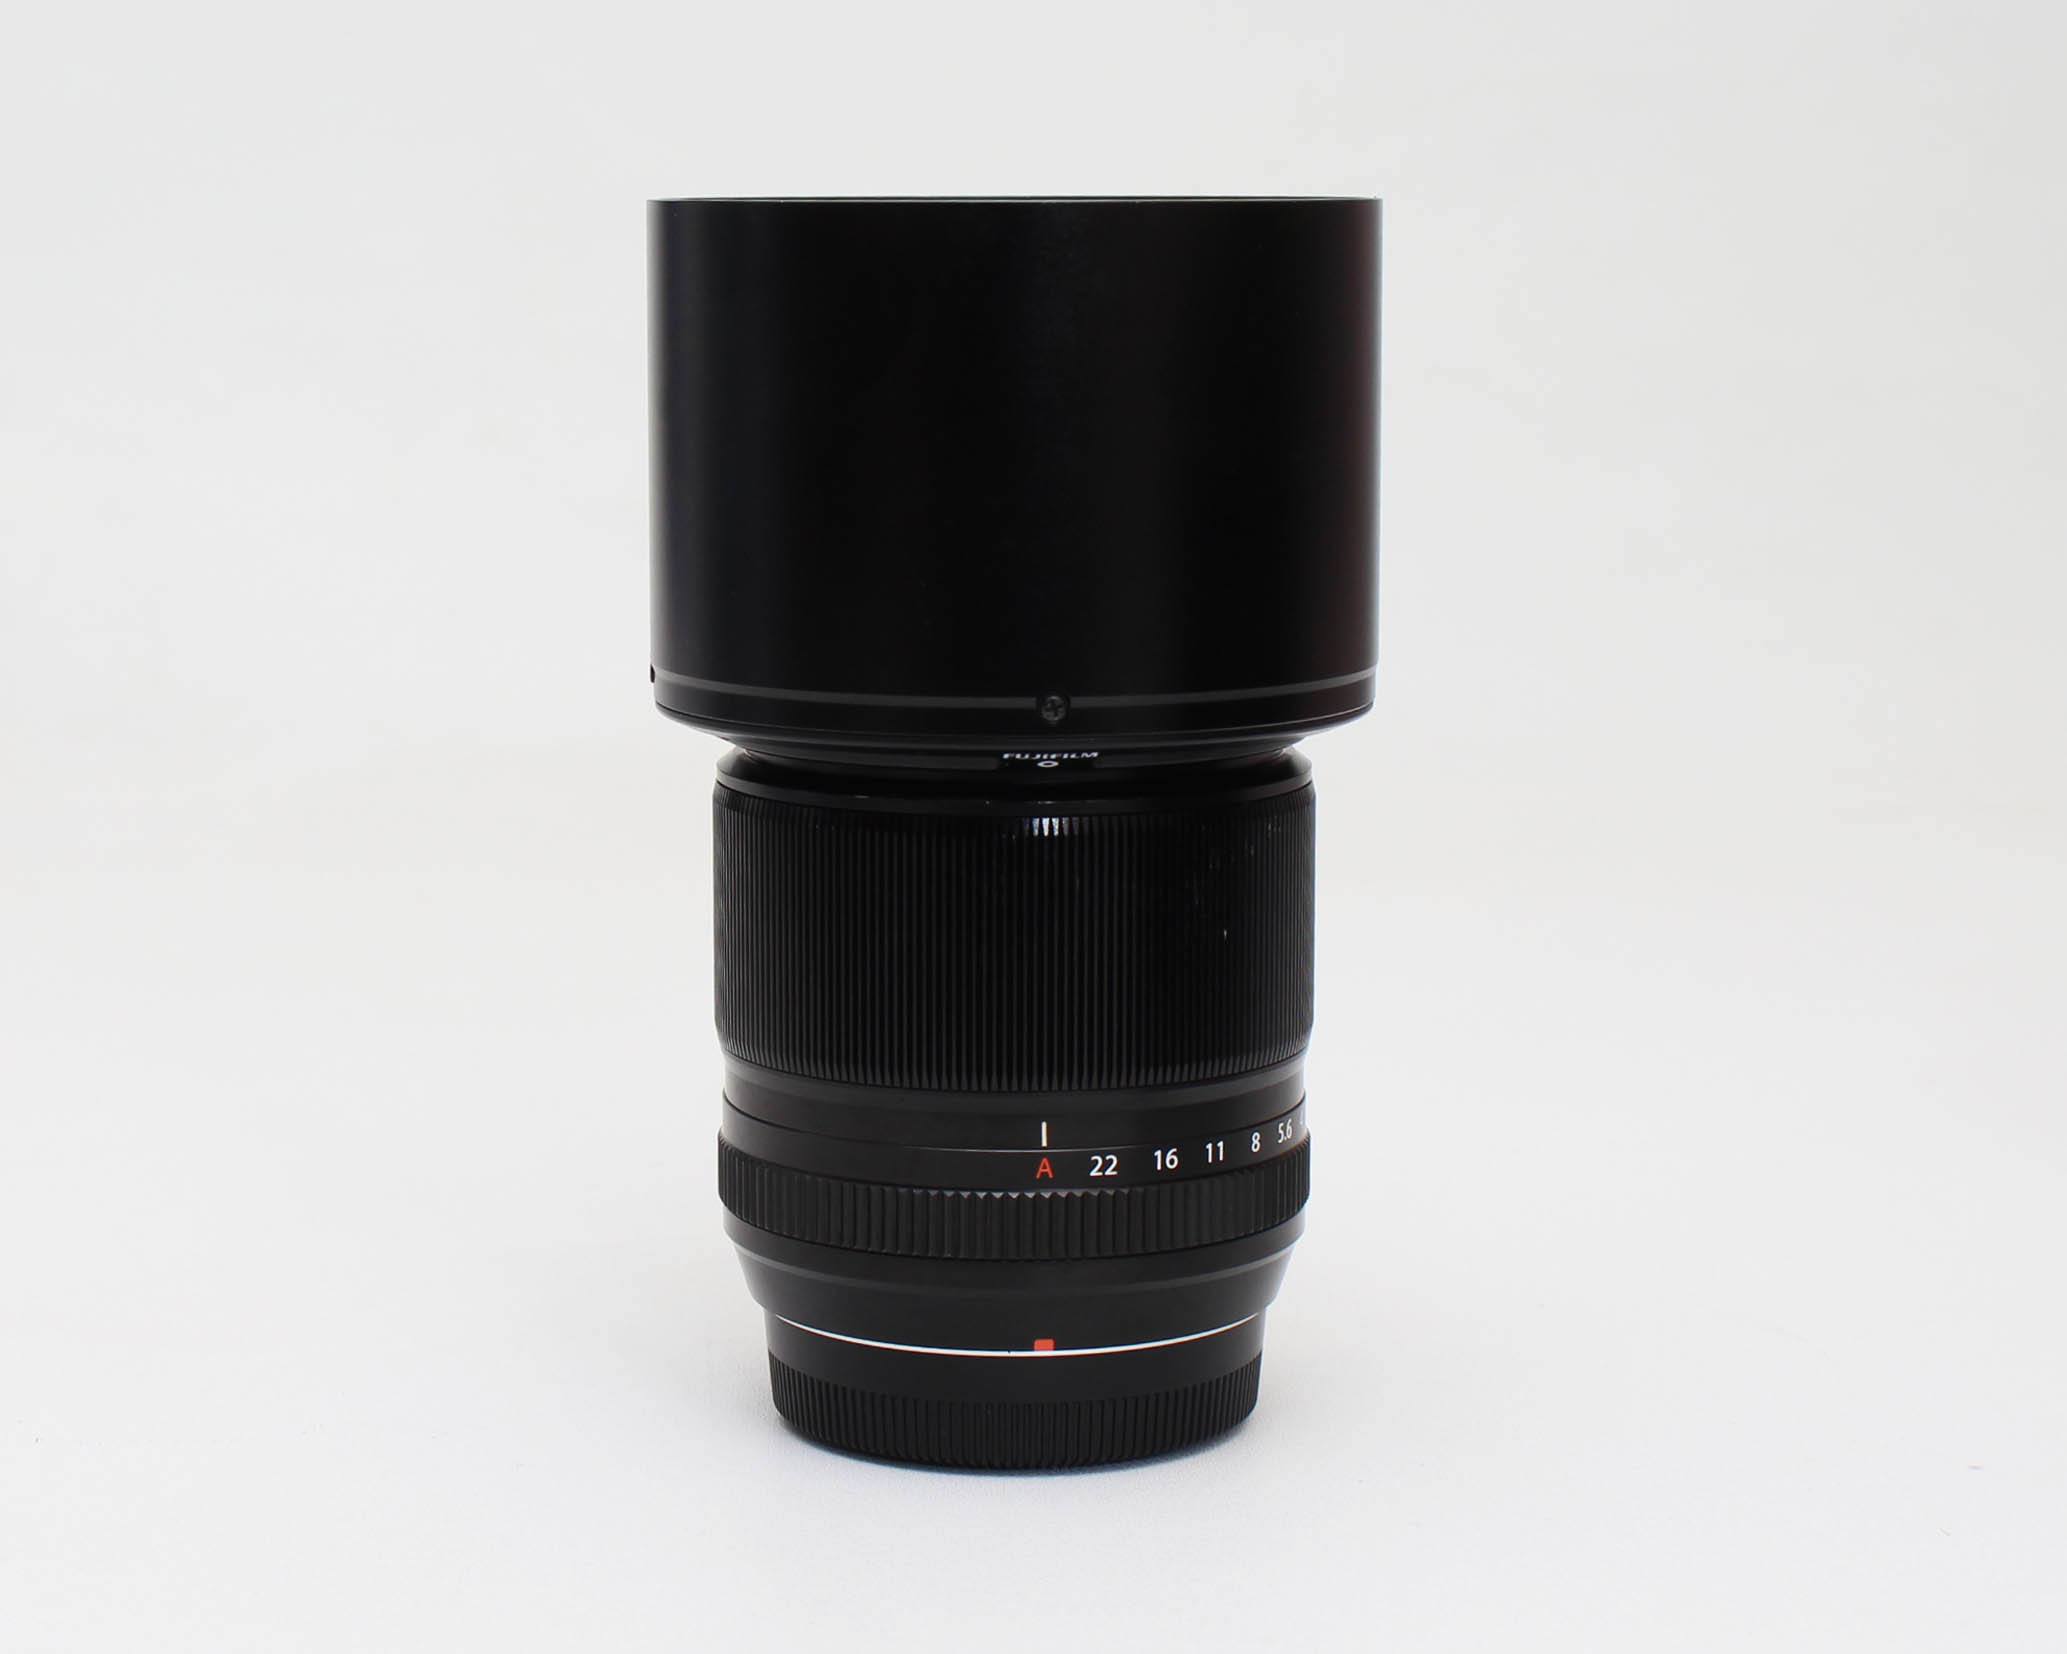 Ống kính Fujifilm XF 60mm f/2.4 R Macro